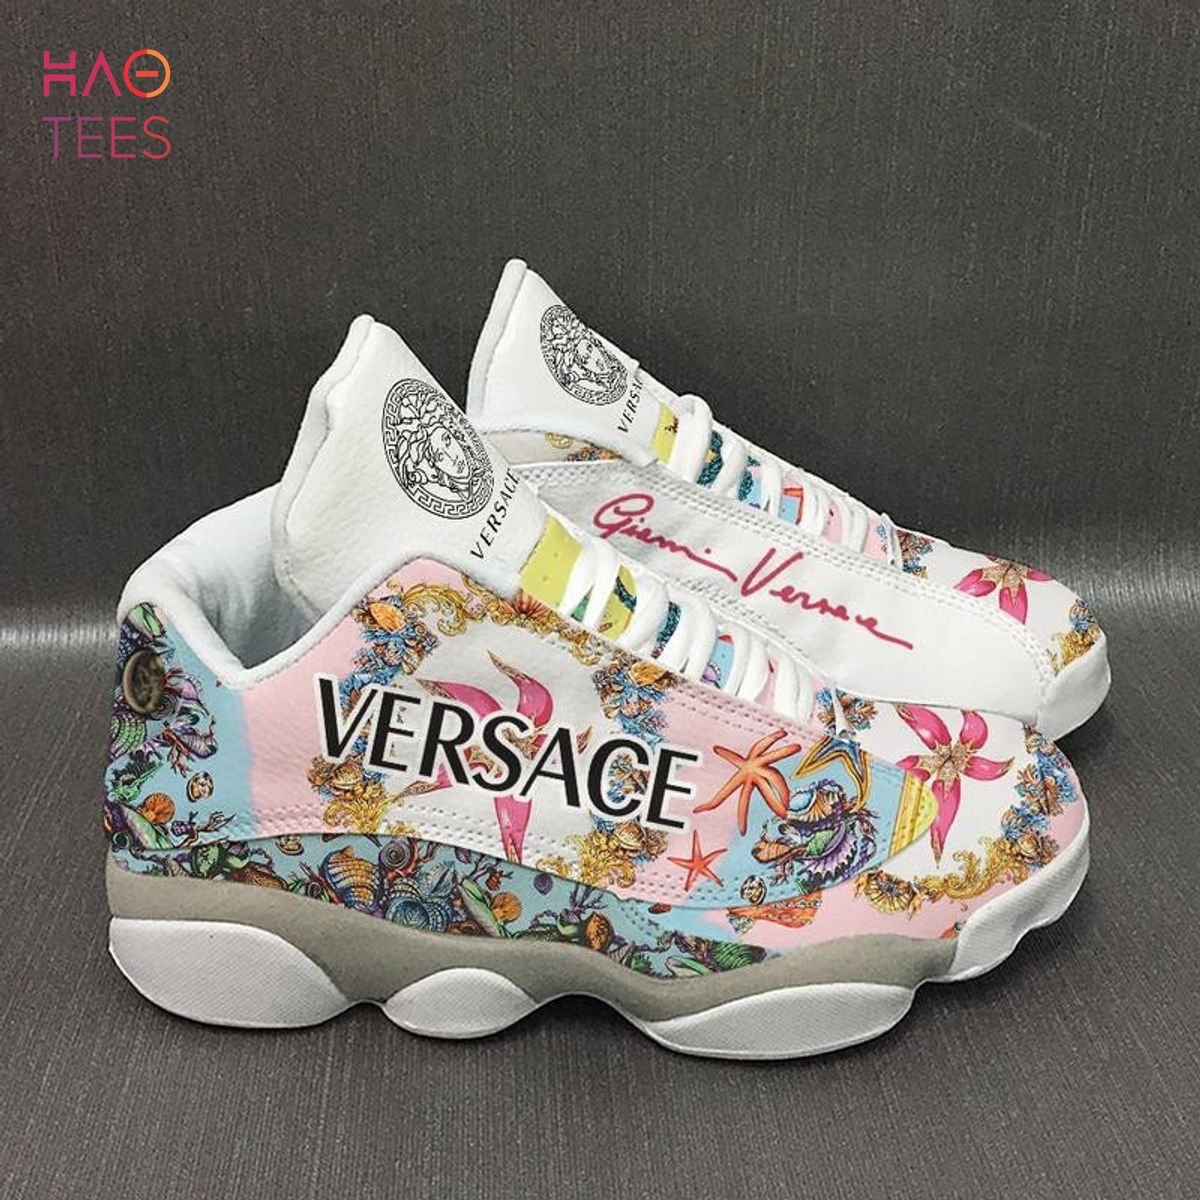 Air Jordan 13 Mix Versace Sea Limited Edition Sneaker Shoes